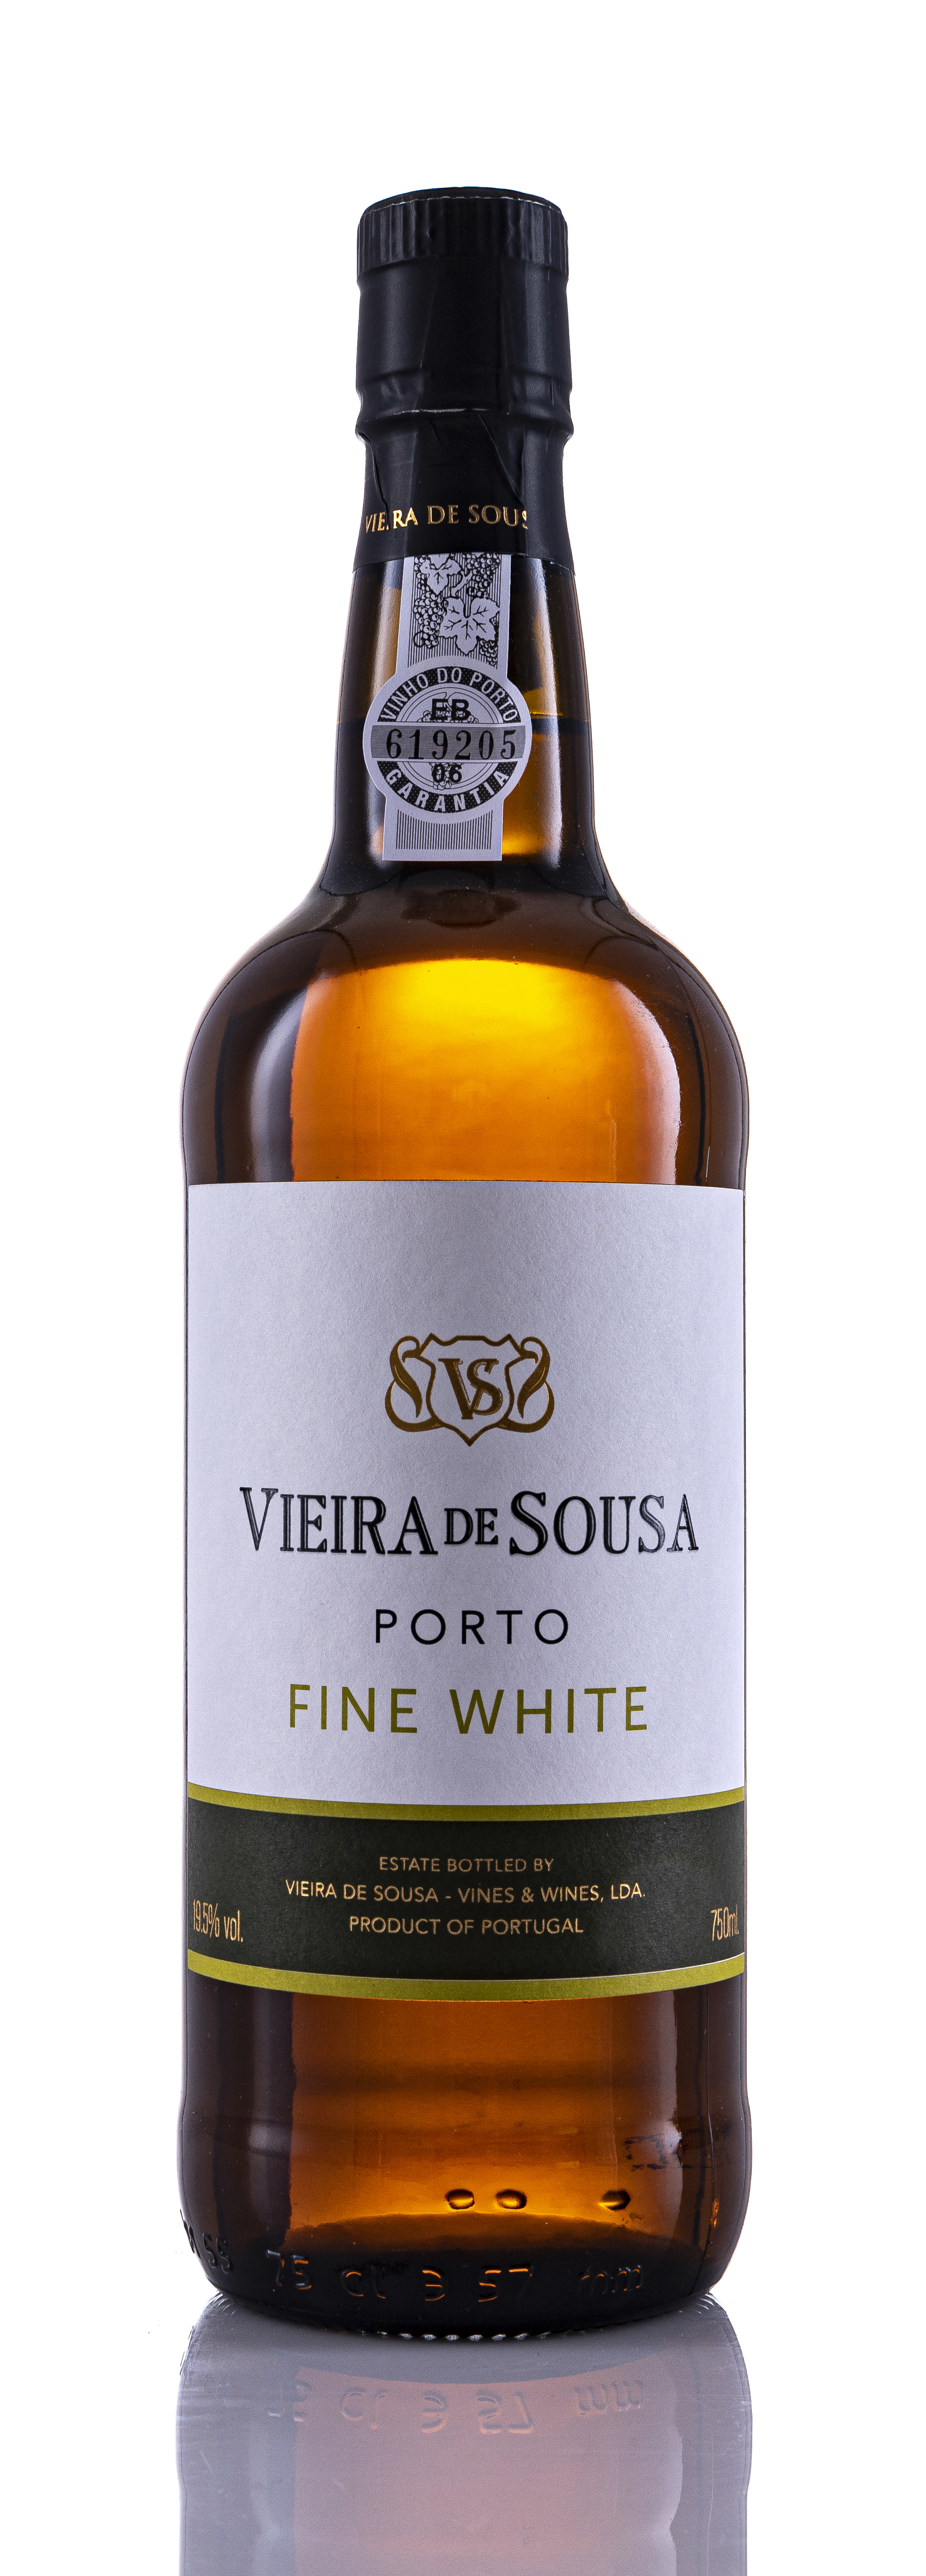 Vieira de Sousa - Portwein Fine white